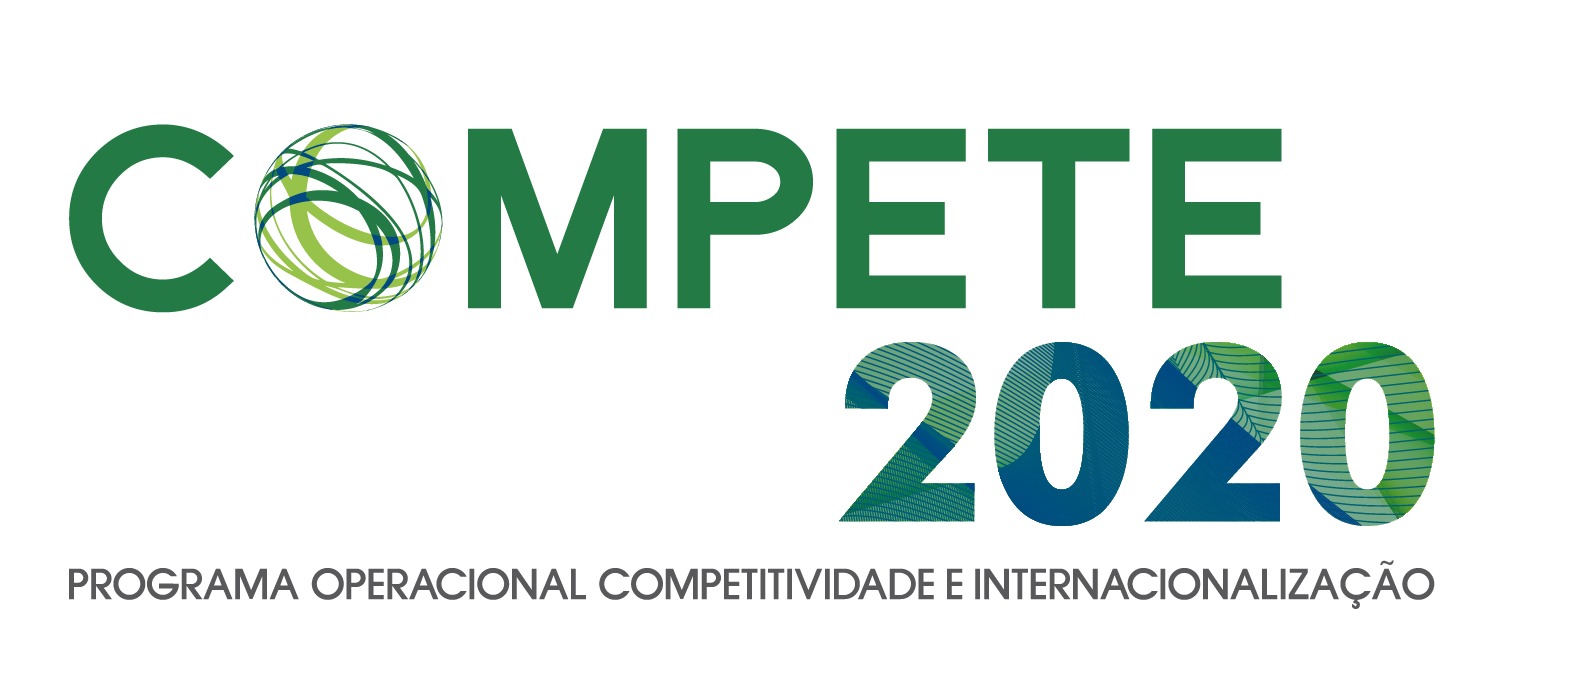 logo compete 2020